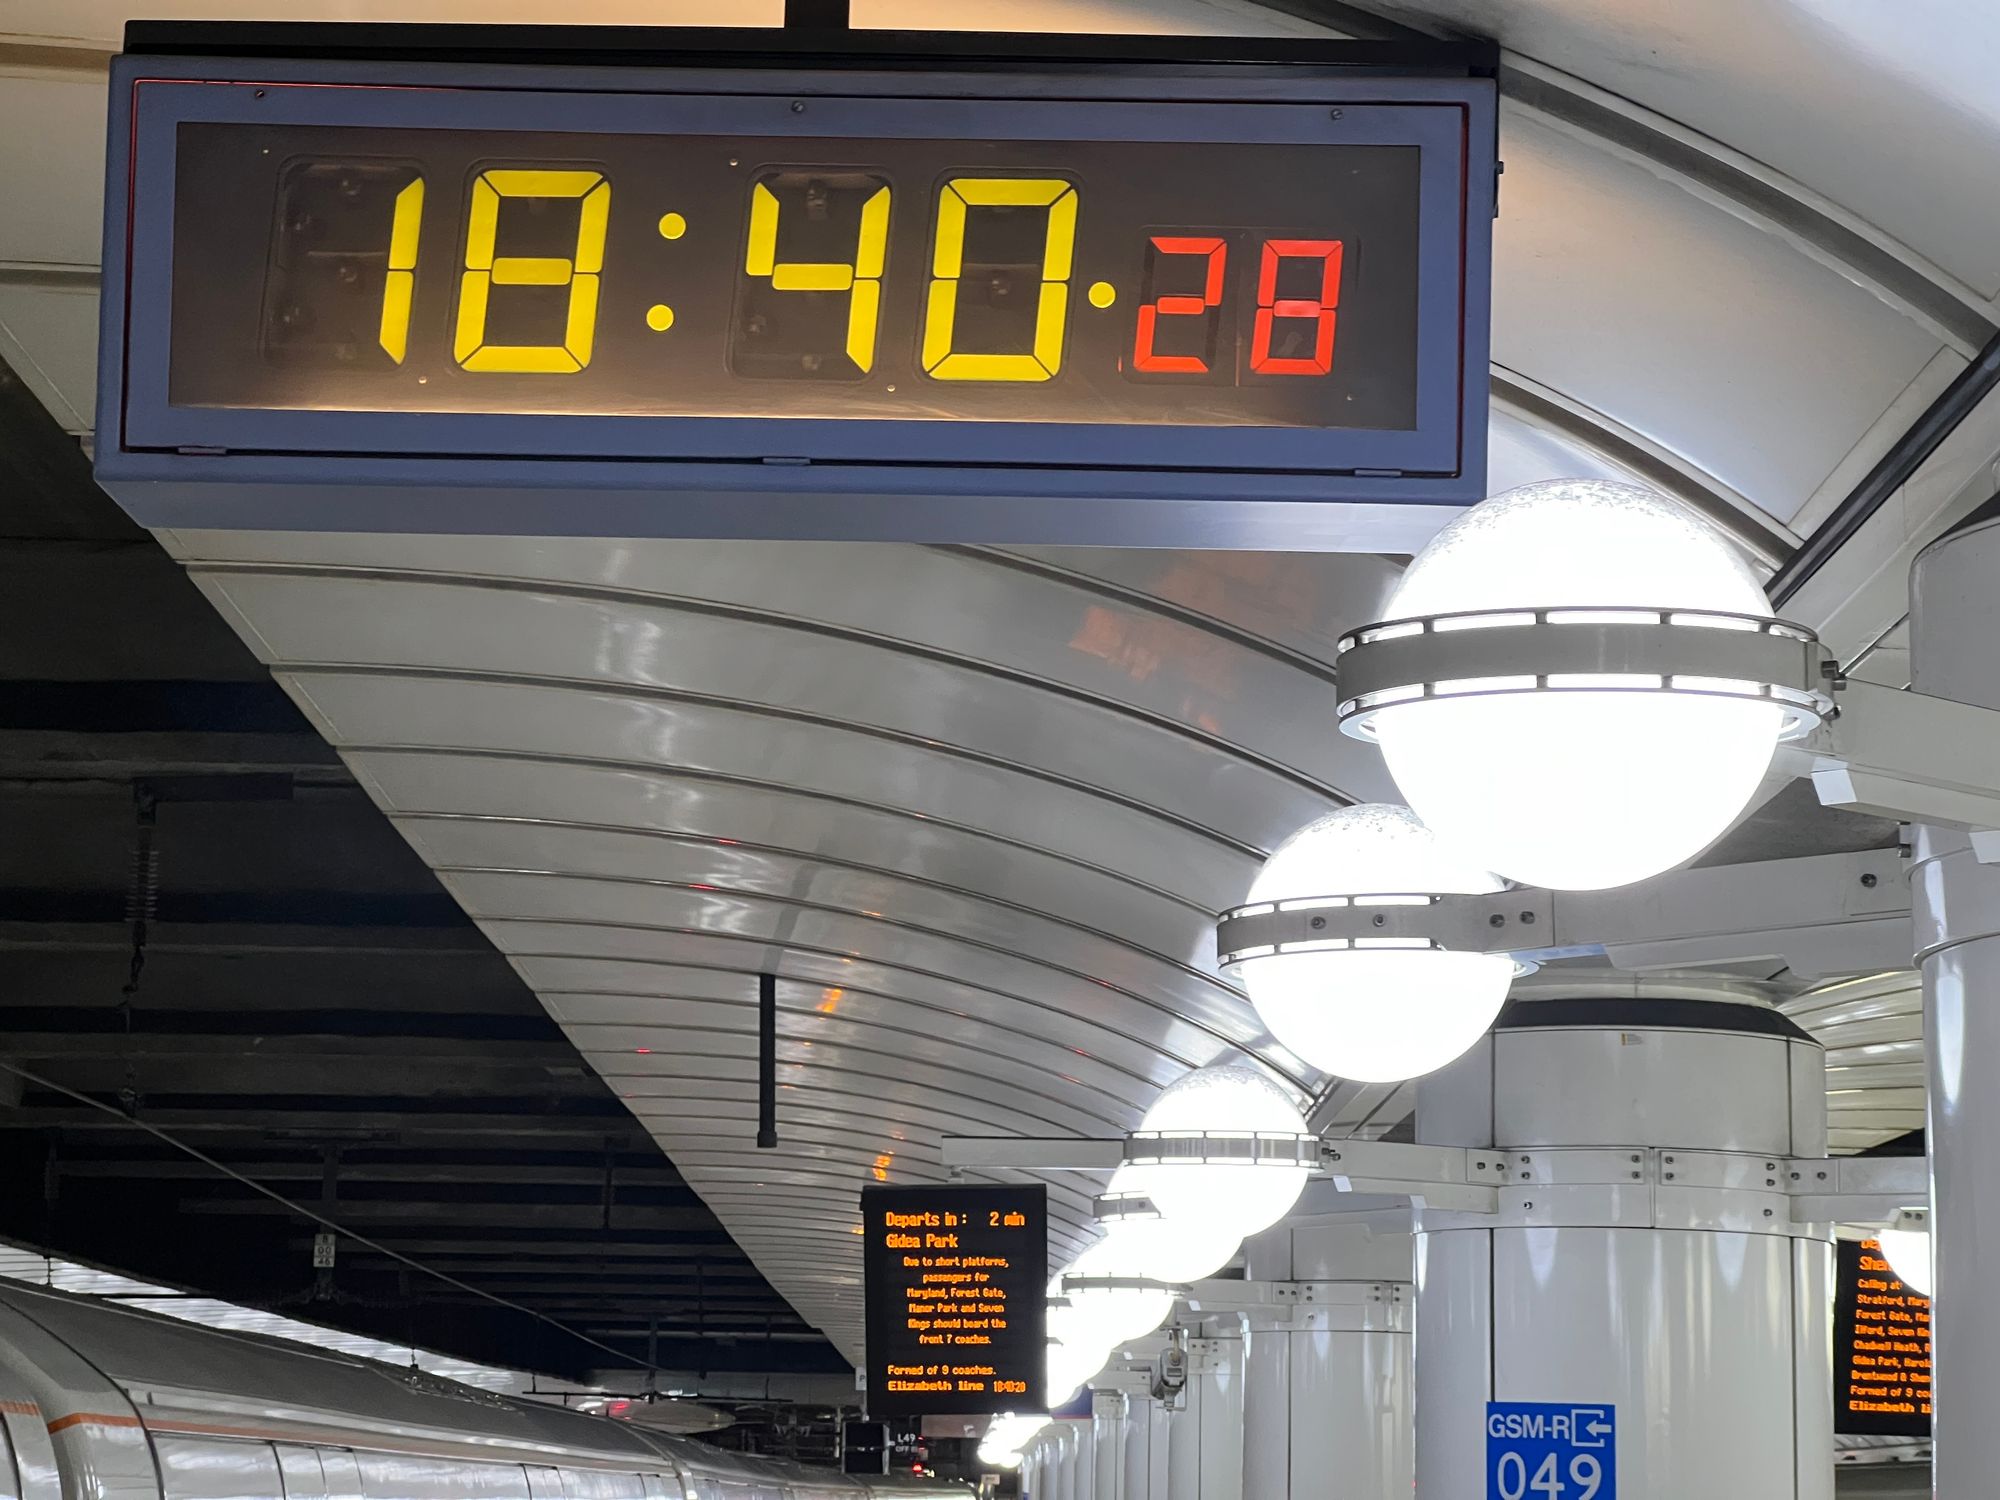 A mechanical seven-segment display clock on a station platform at Liverpool Street reads 18:40:28.